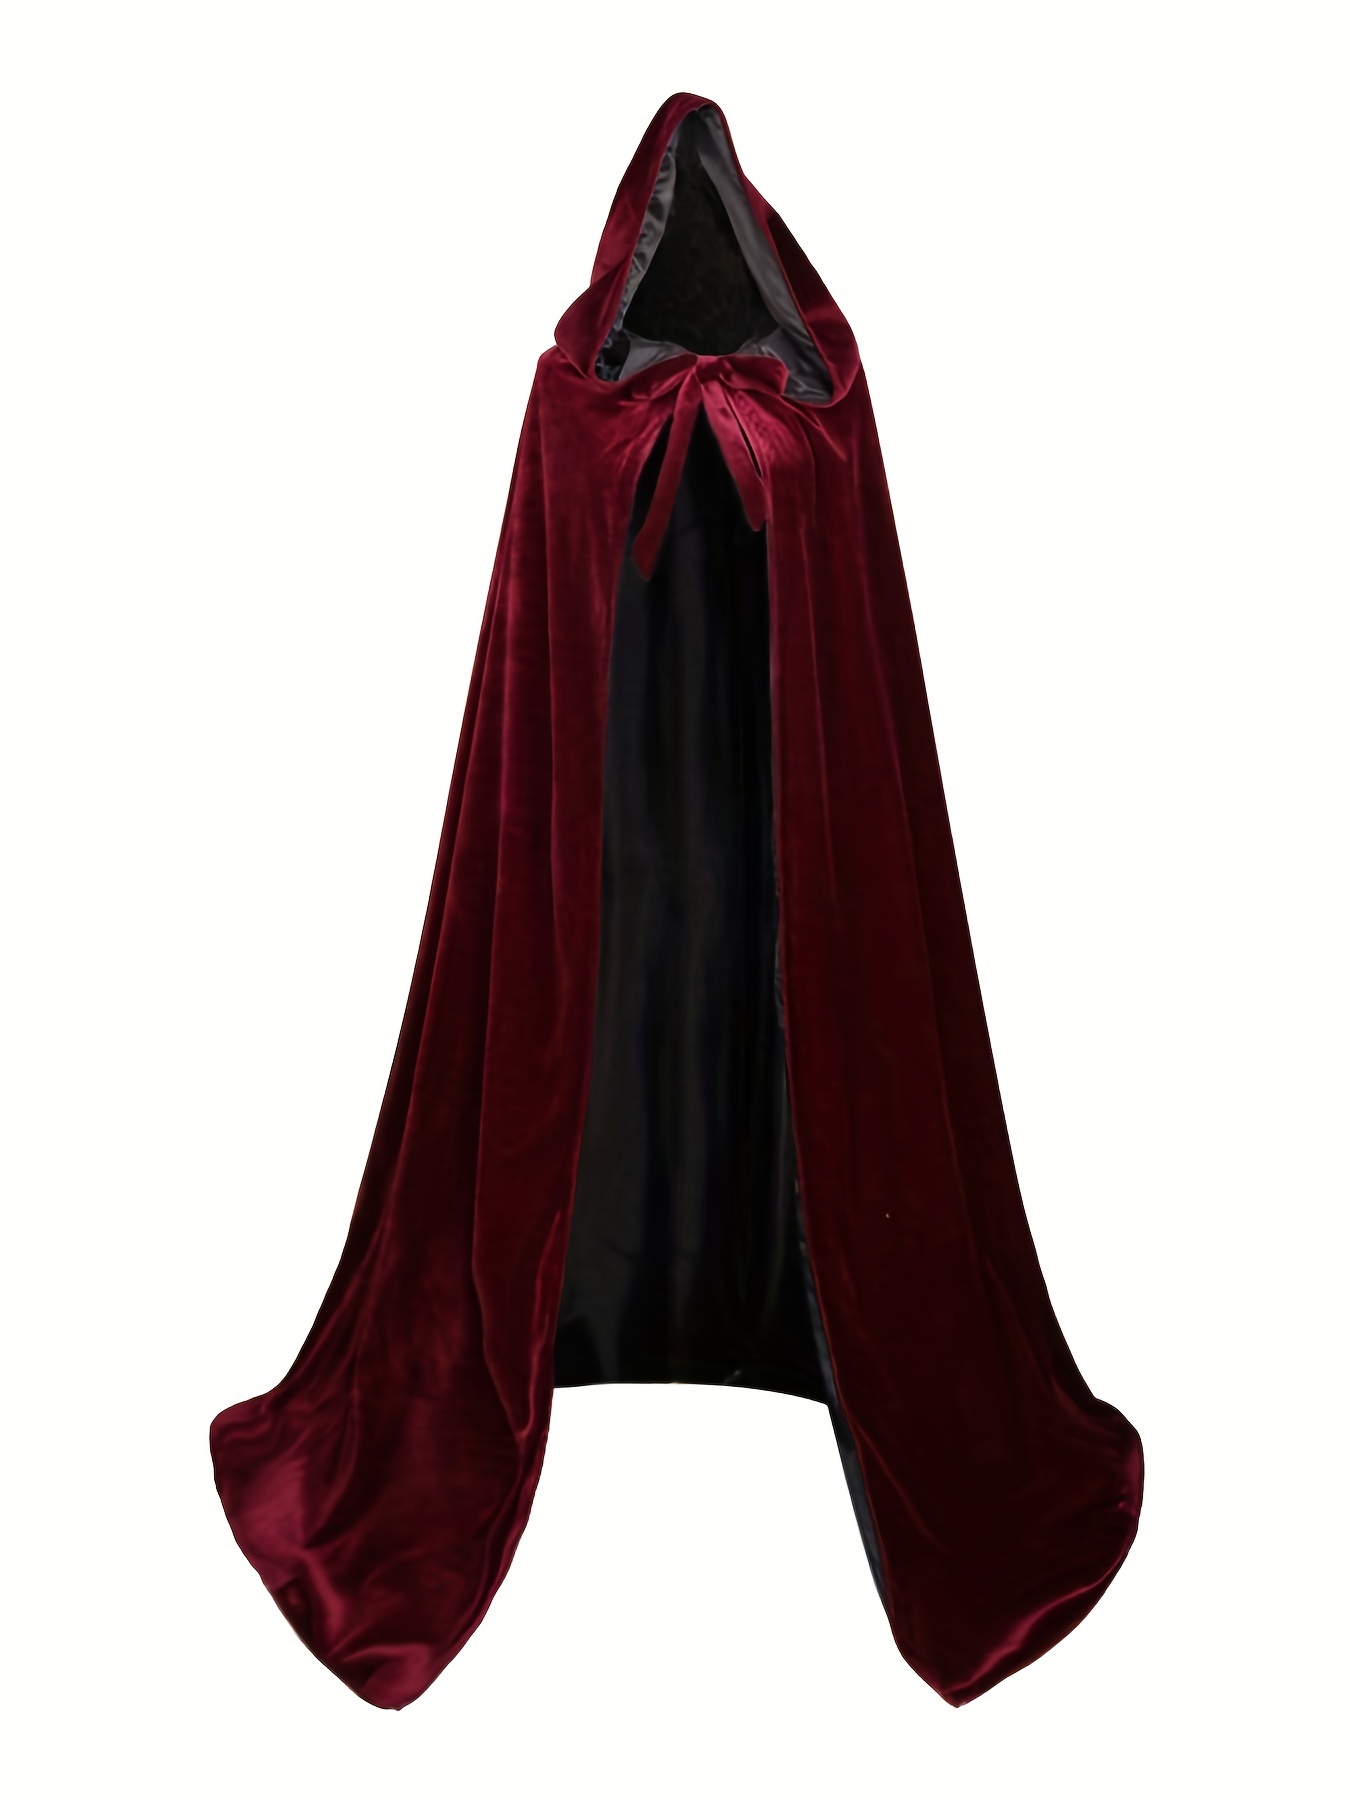 Medieval Hooded Velvet Cloak in Purple or Teal with Pockets